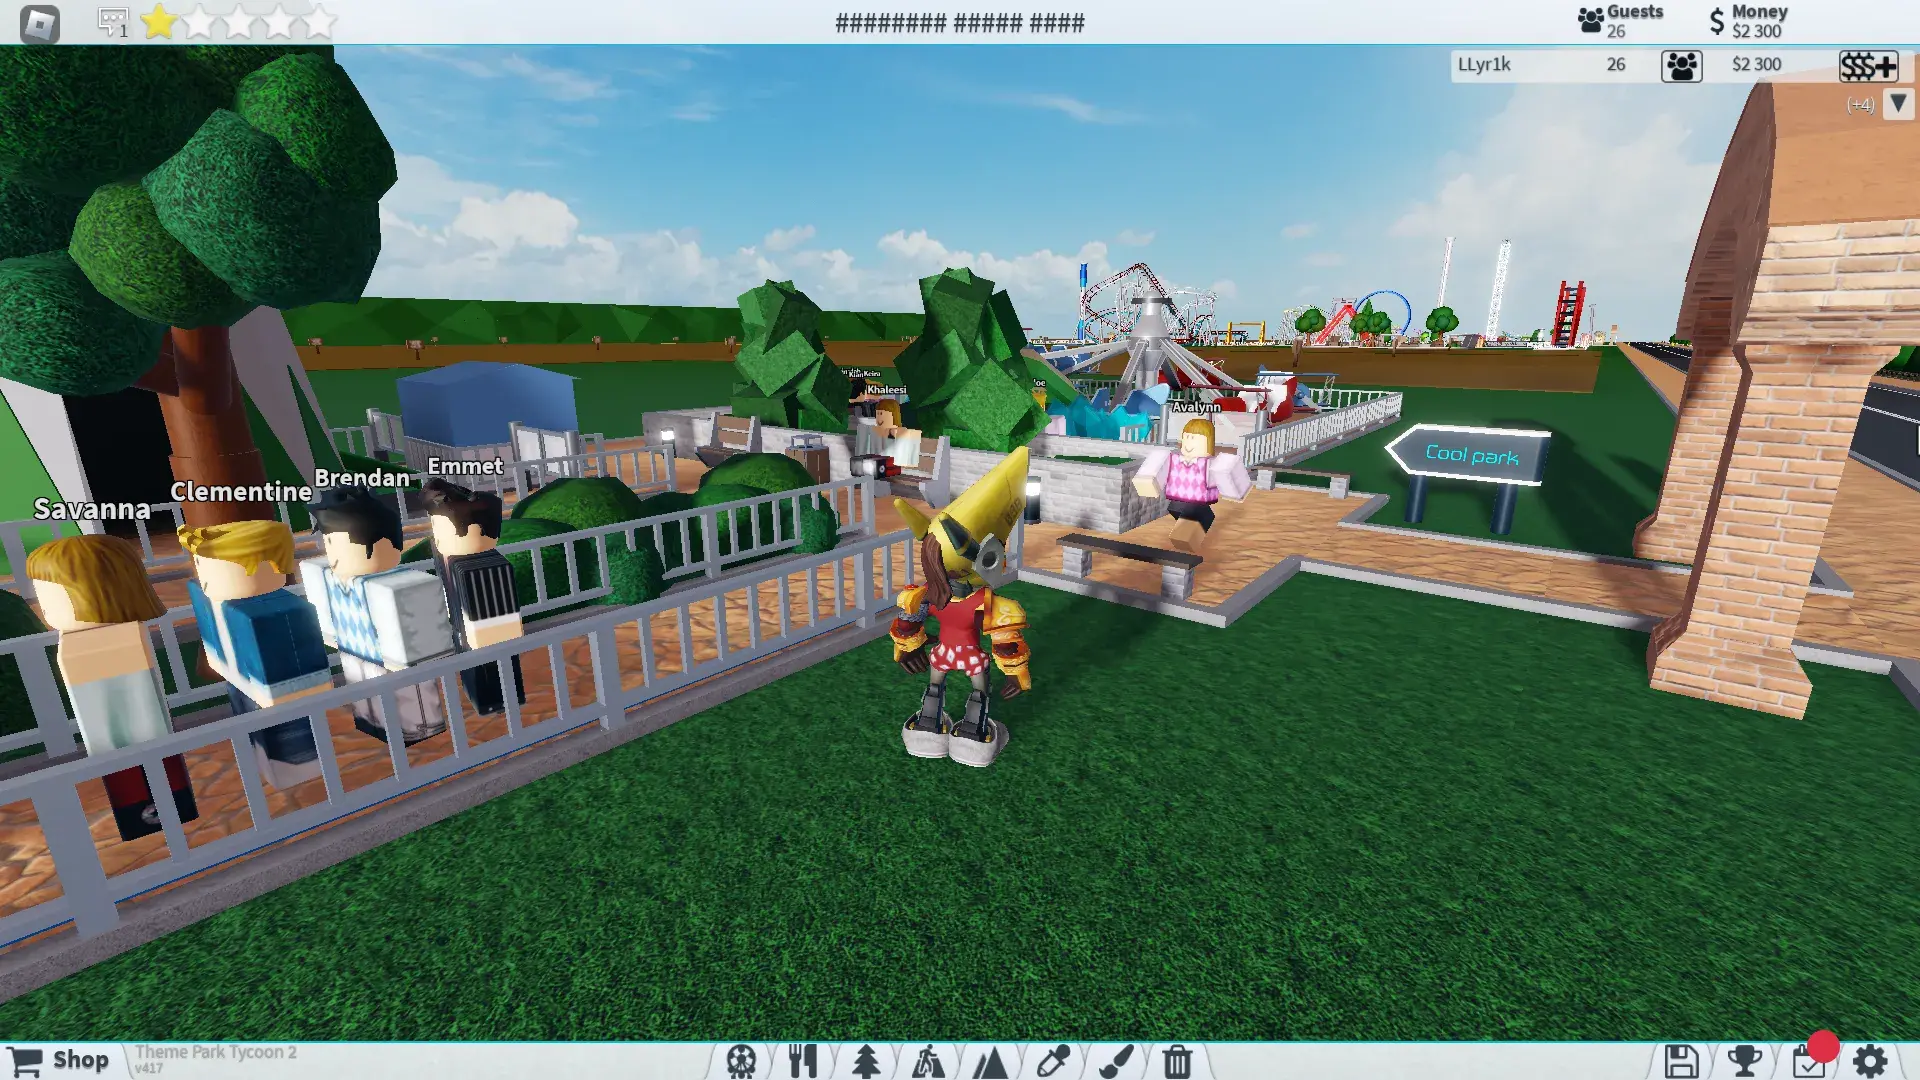 Theme Park Tycoon 2 mode